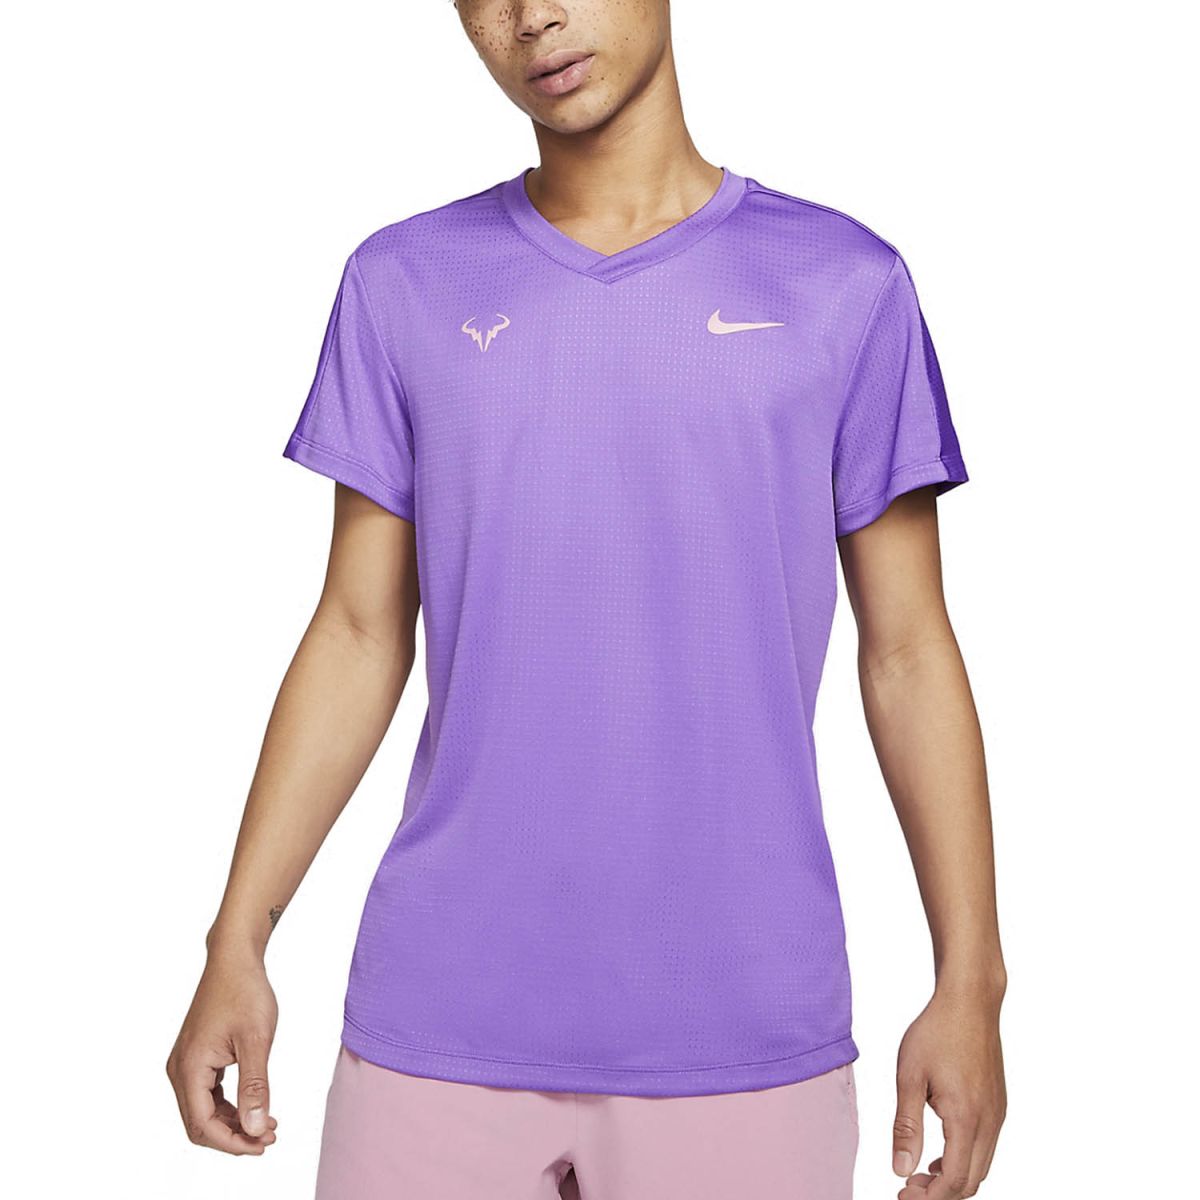 Rafa Challenger Men's Short-Sleeve Tennis Top CV2572-528